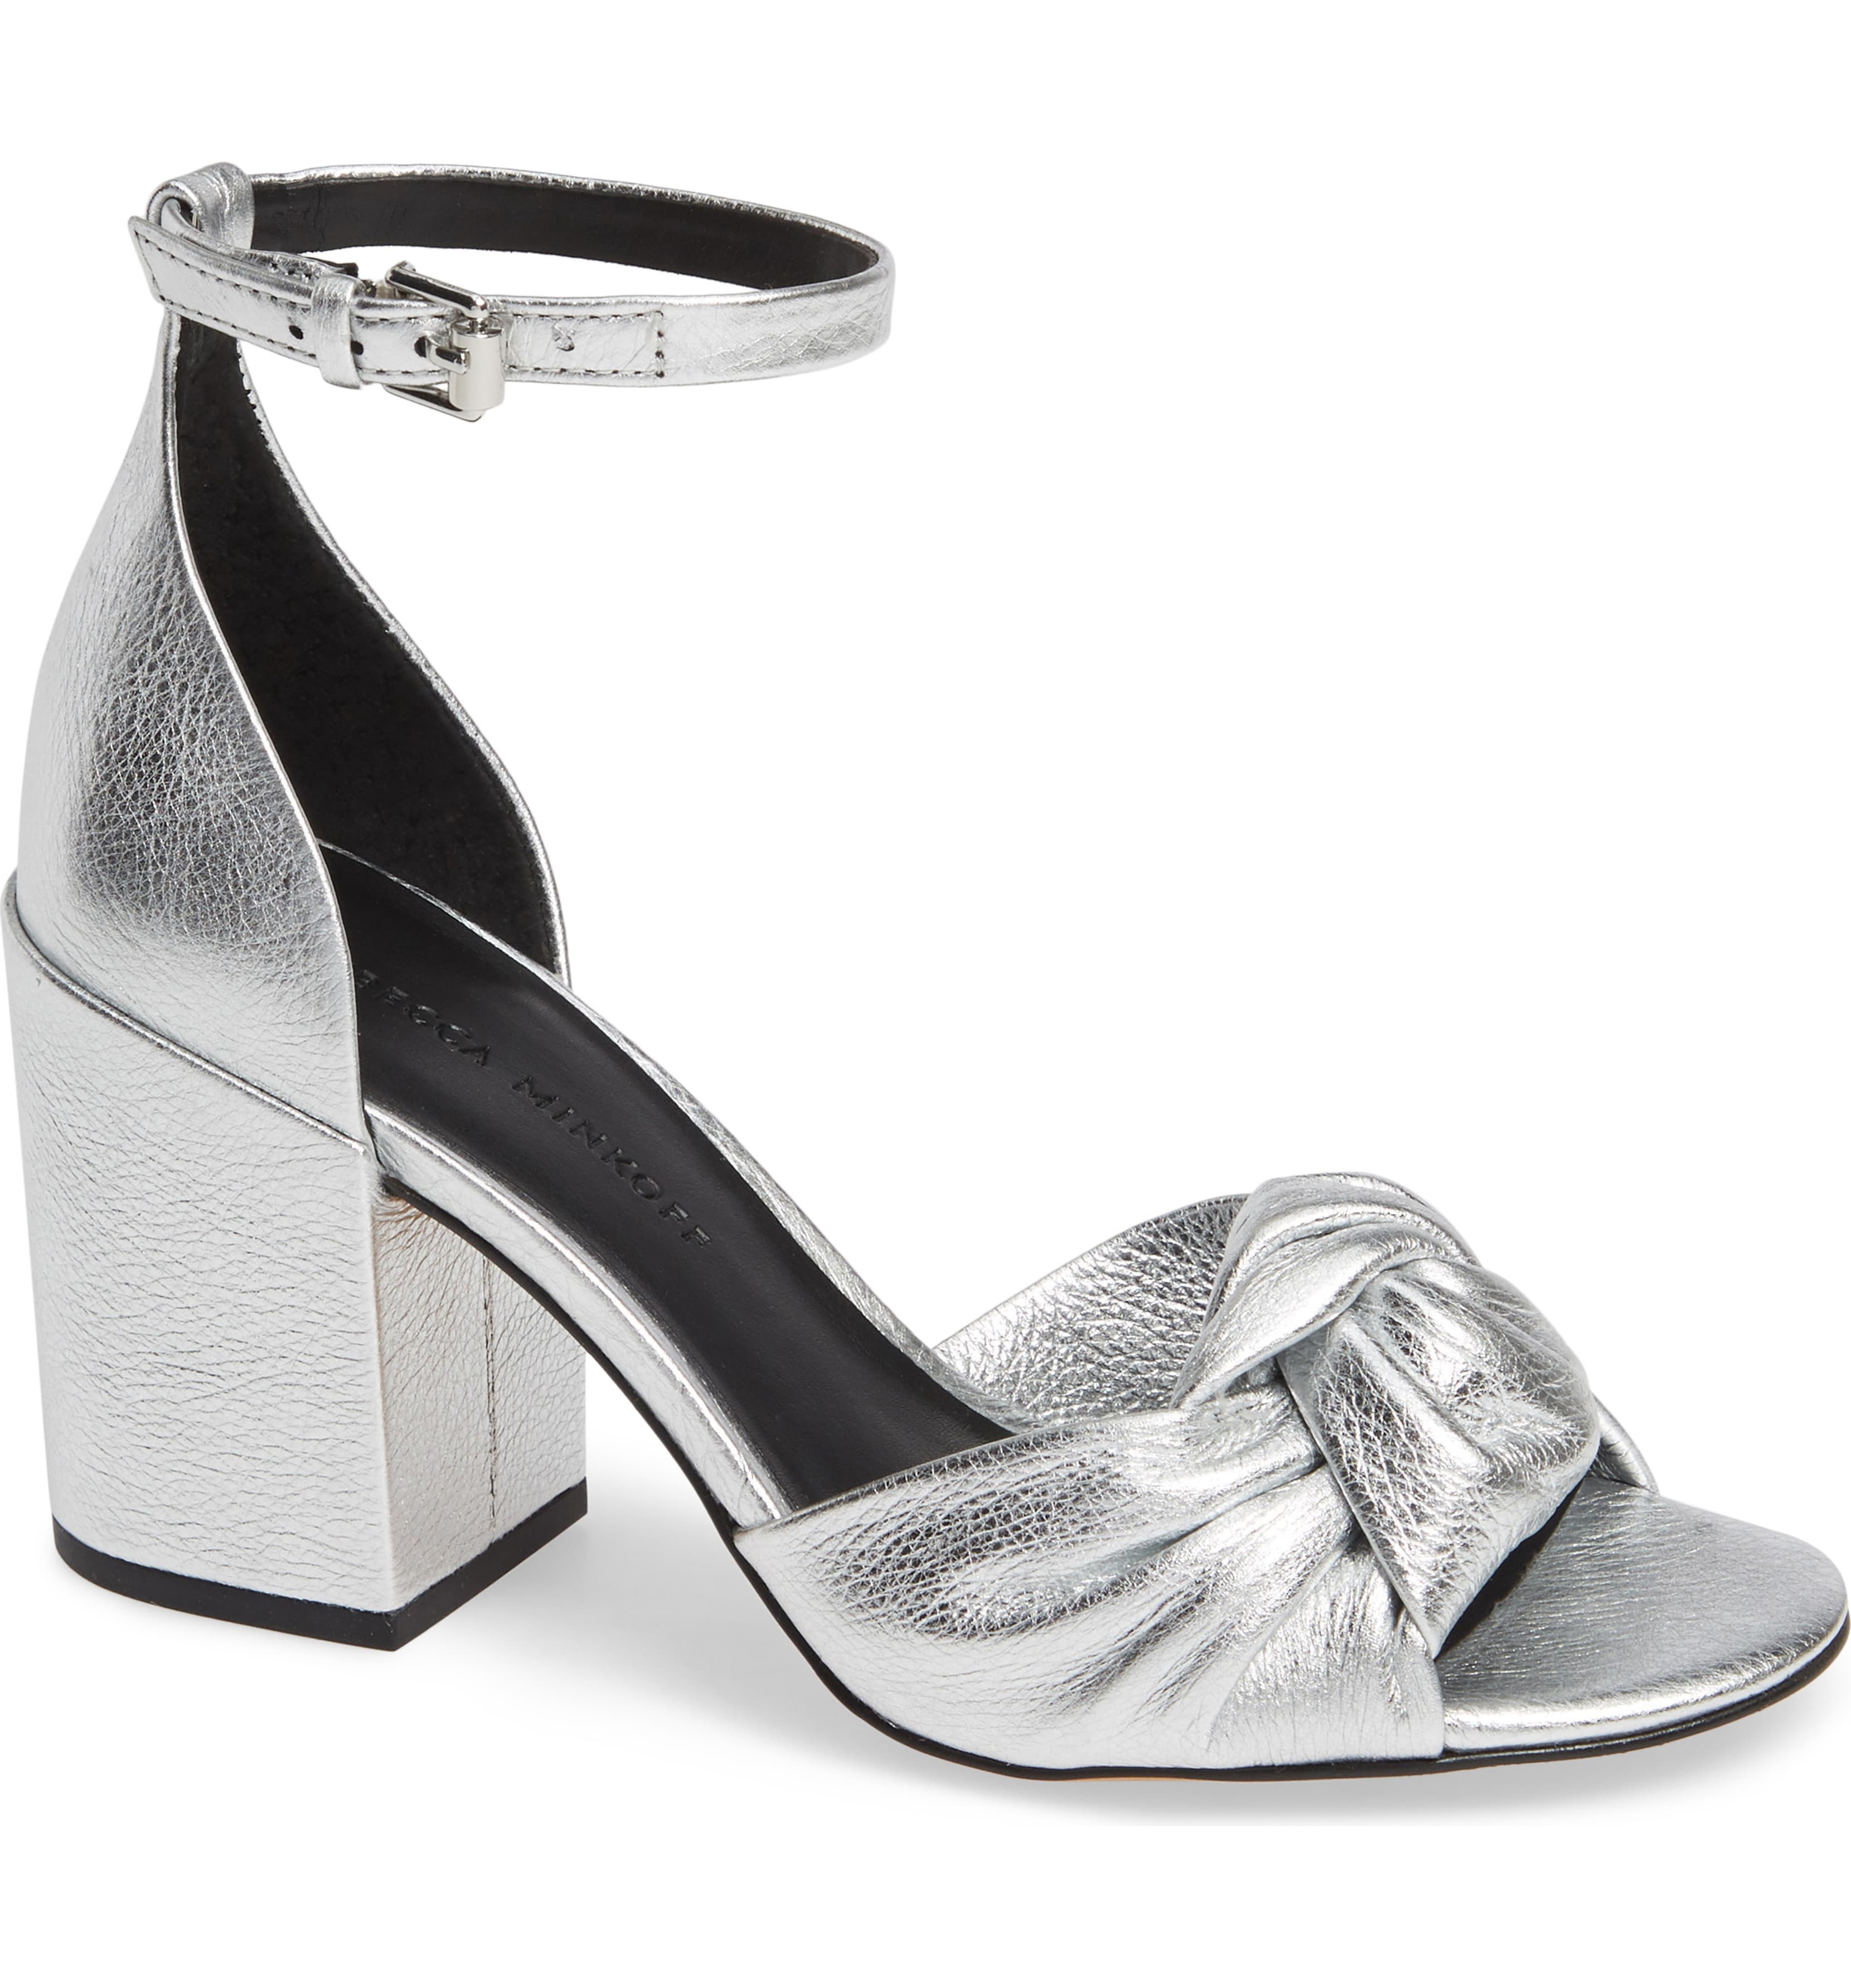 A silver high heel shoe